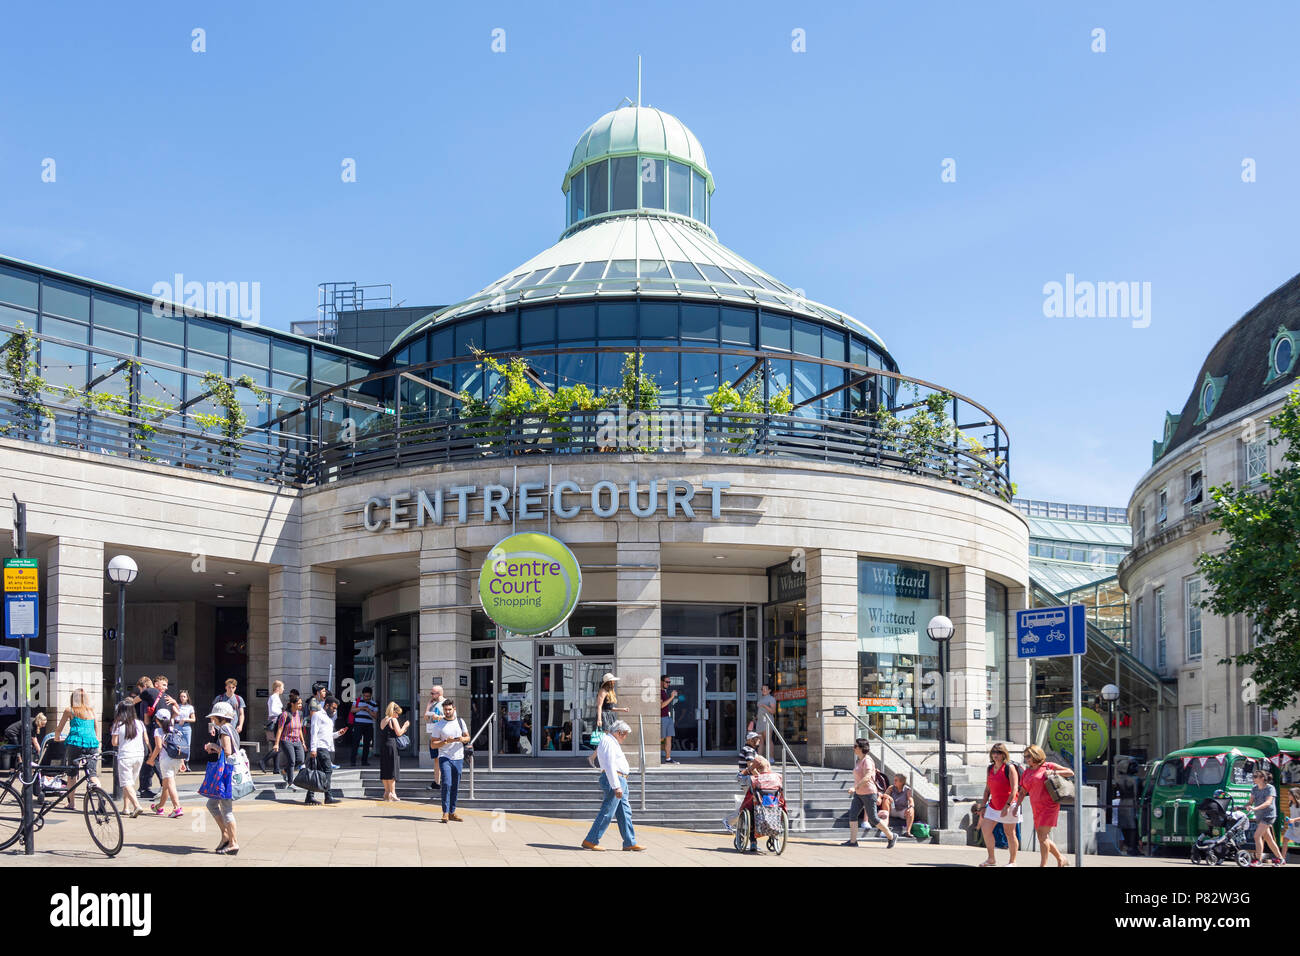 Centre Court Shopping Centre, Le Broadway, London, London Borough of Merton, Greater London, Angleterre, Royaume-Uni Banque D'Images